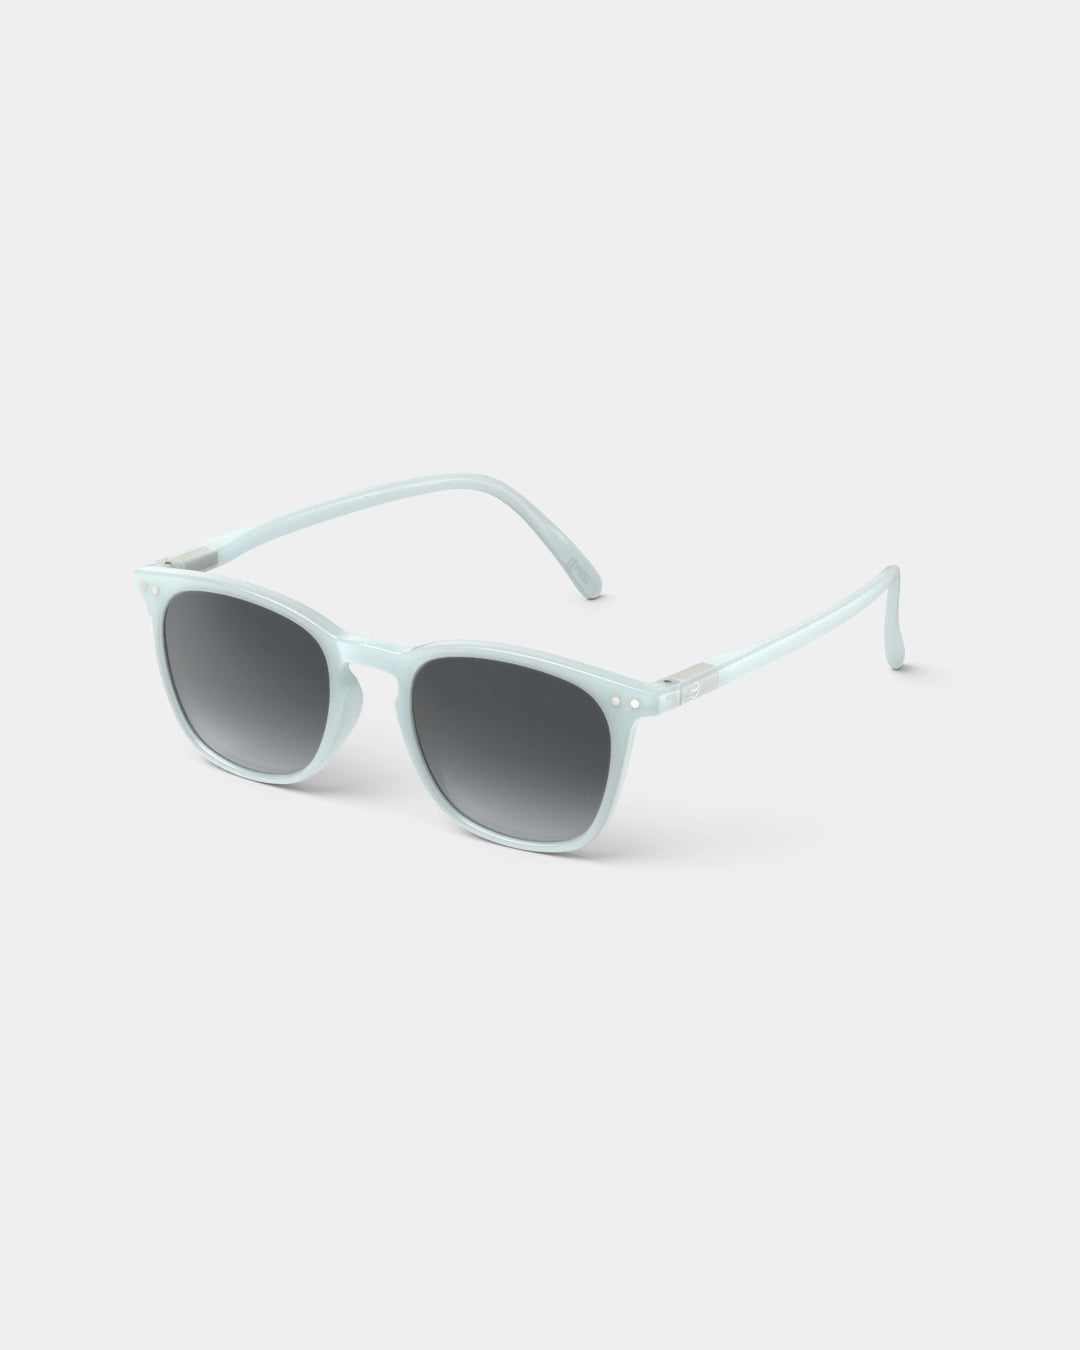 #E Sun Glasses - misty blue